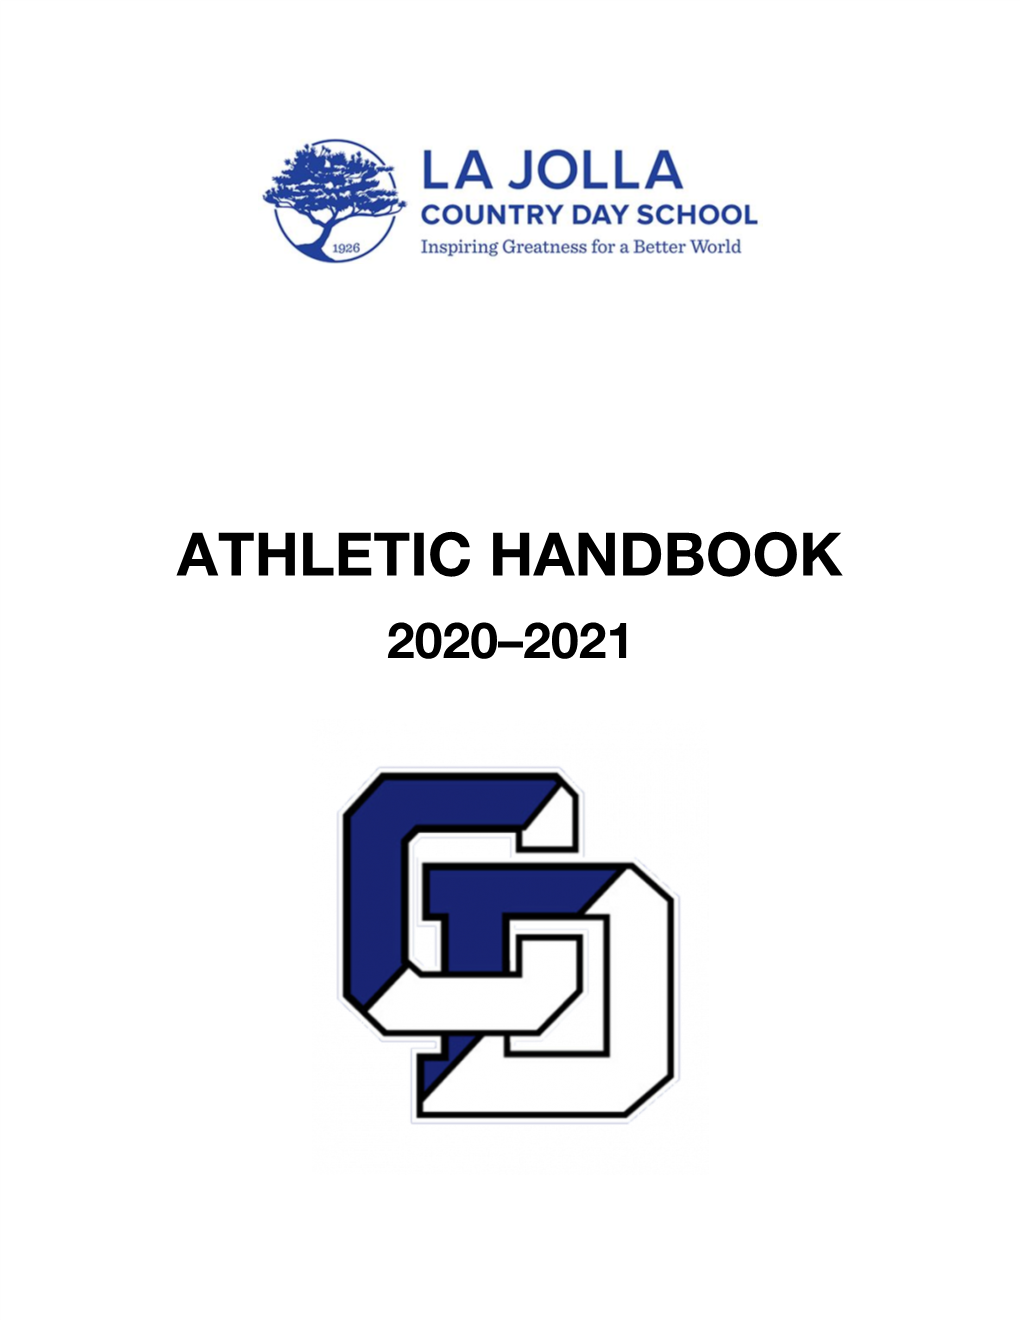 Athletic Handbook